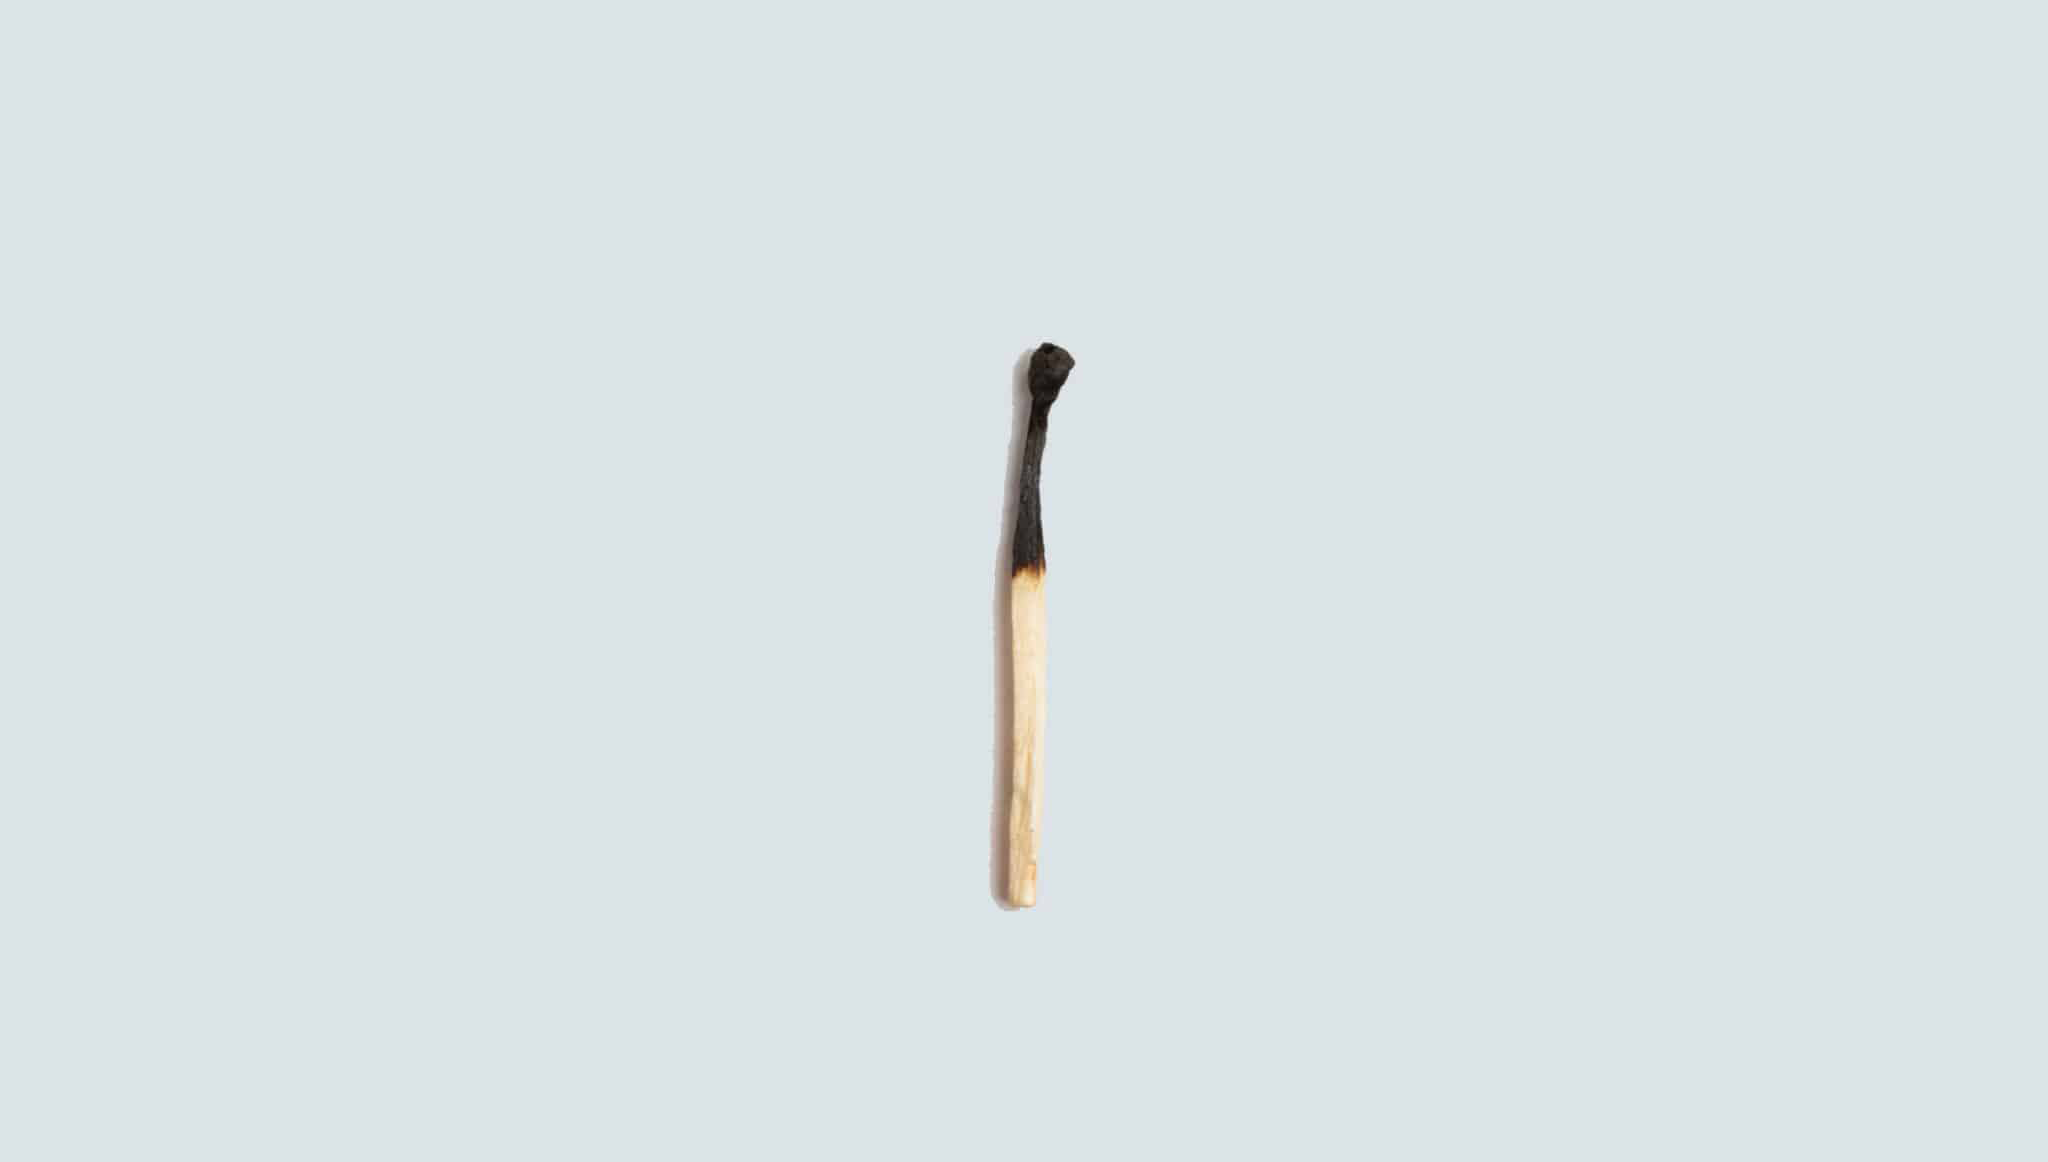 Photo of a single matchstick